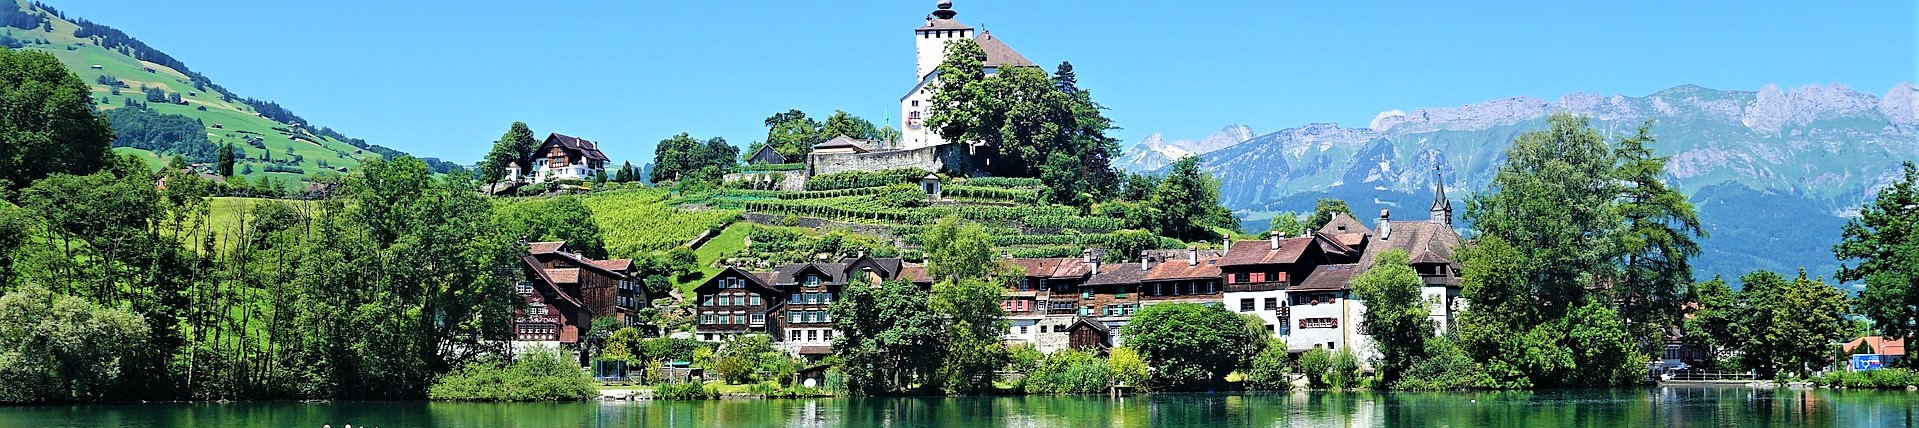 East Switzerland Region|東スイス地方